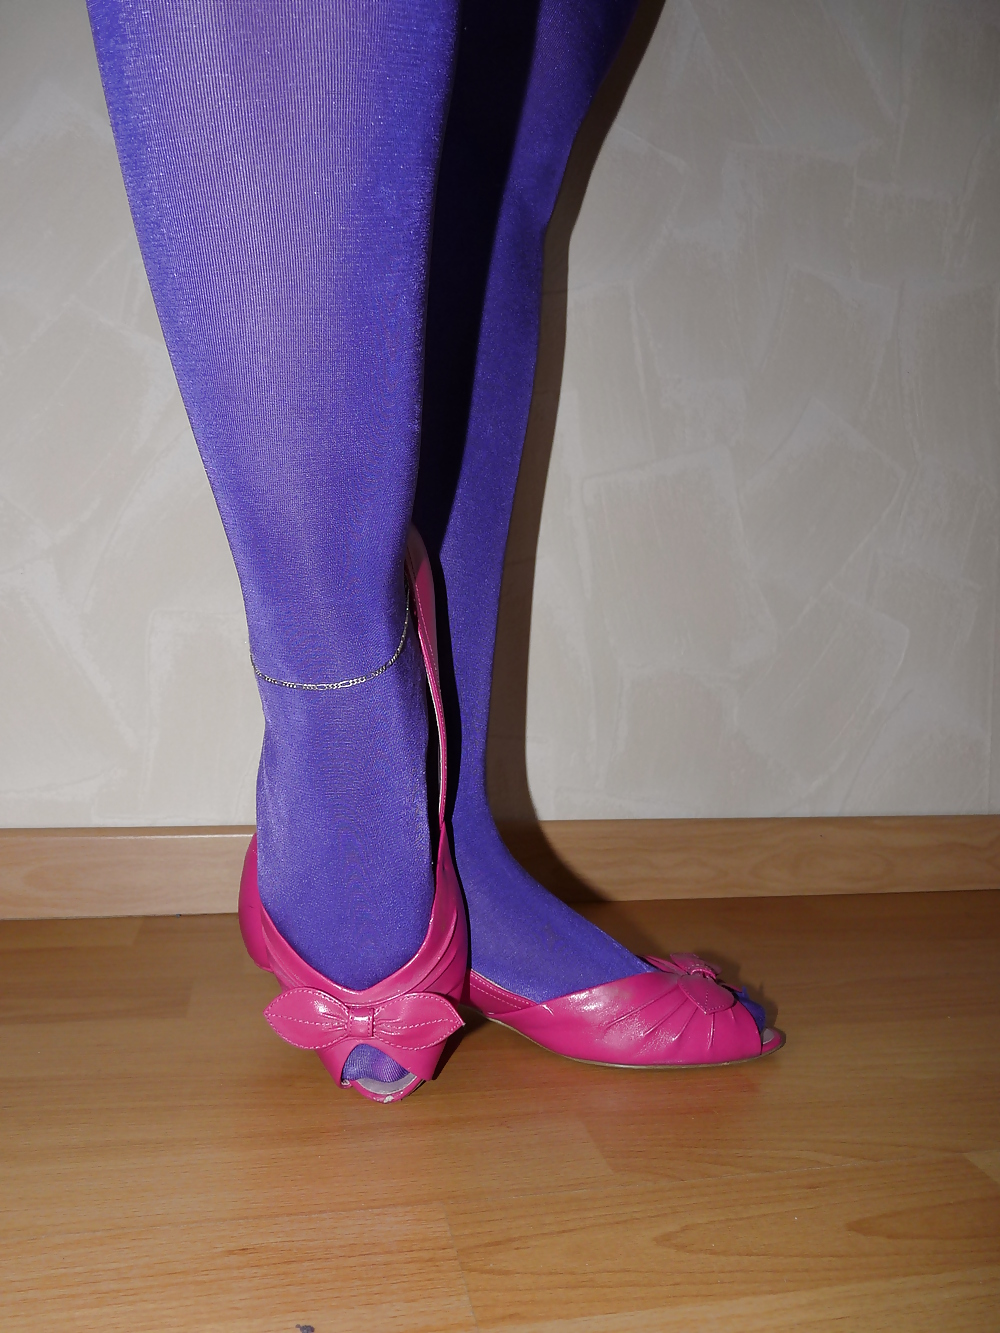 Moglie lucida viola collant rosa peep toes
 #15417067